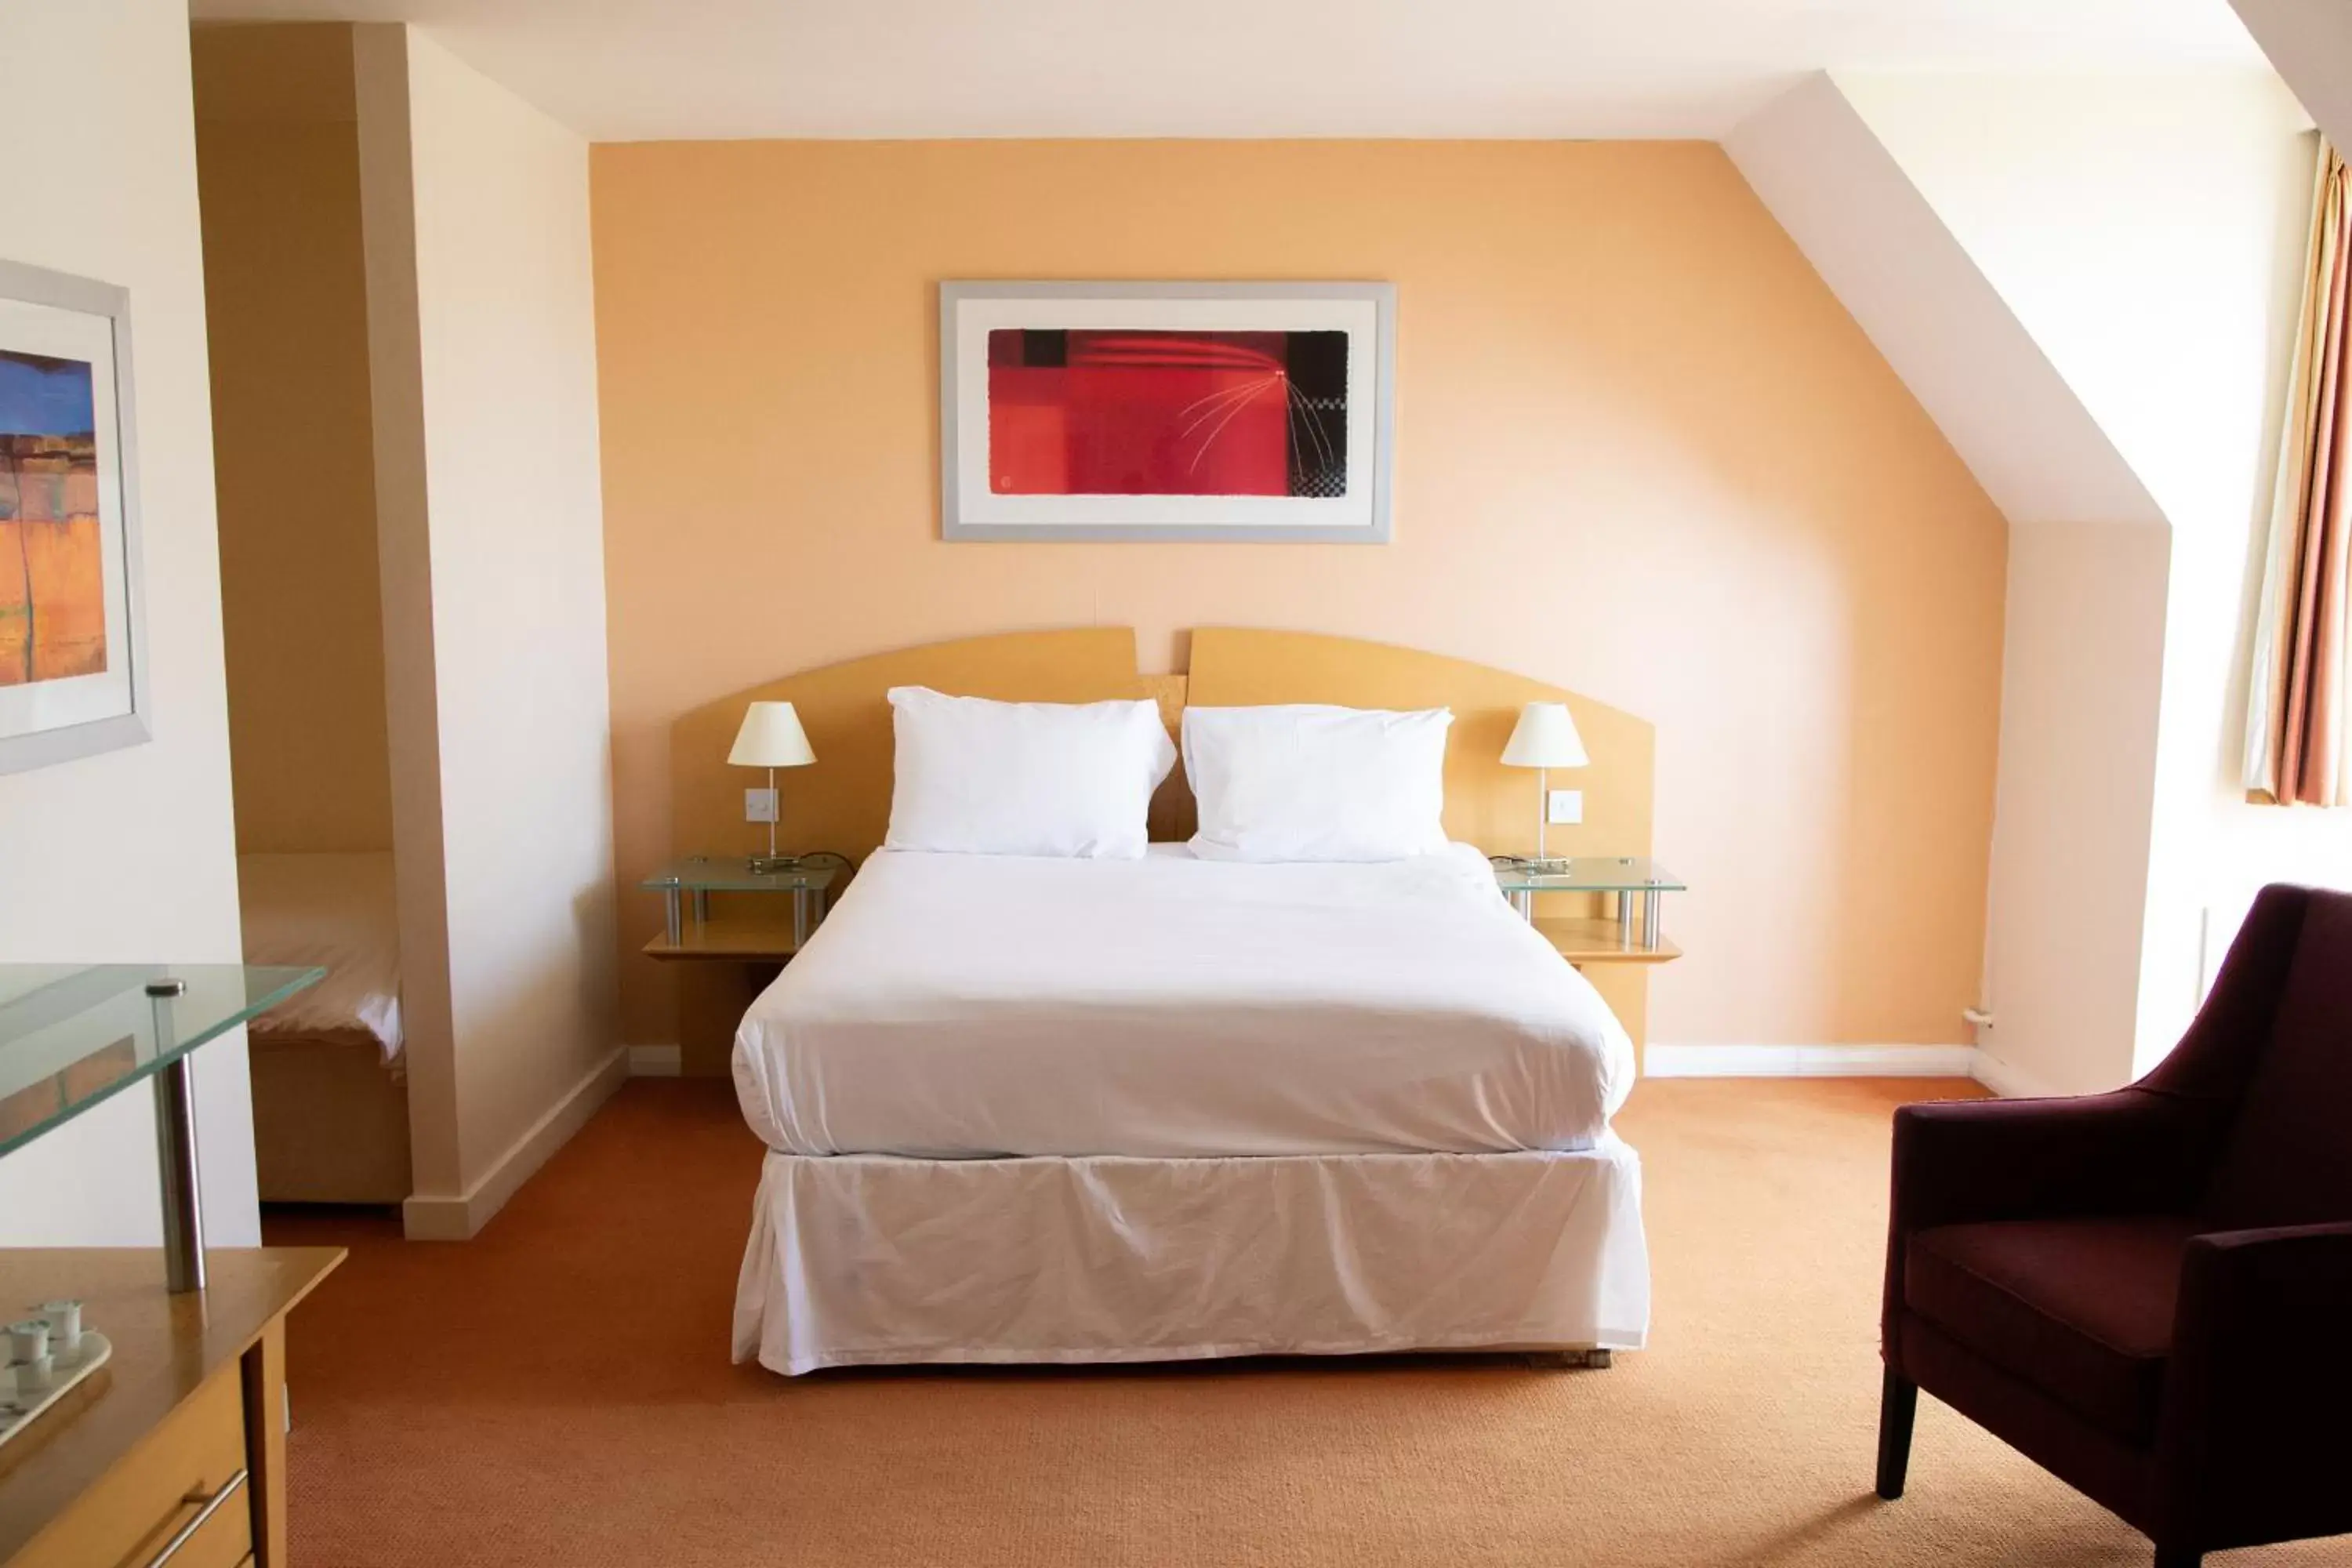 Bed, Room Photo in Holiday Inn Ashford - North A20, an IHG Hotel